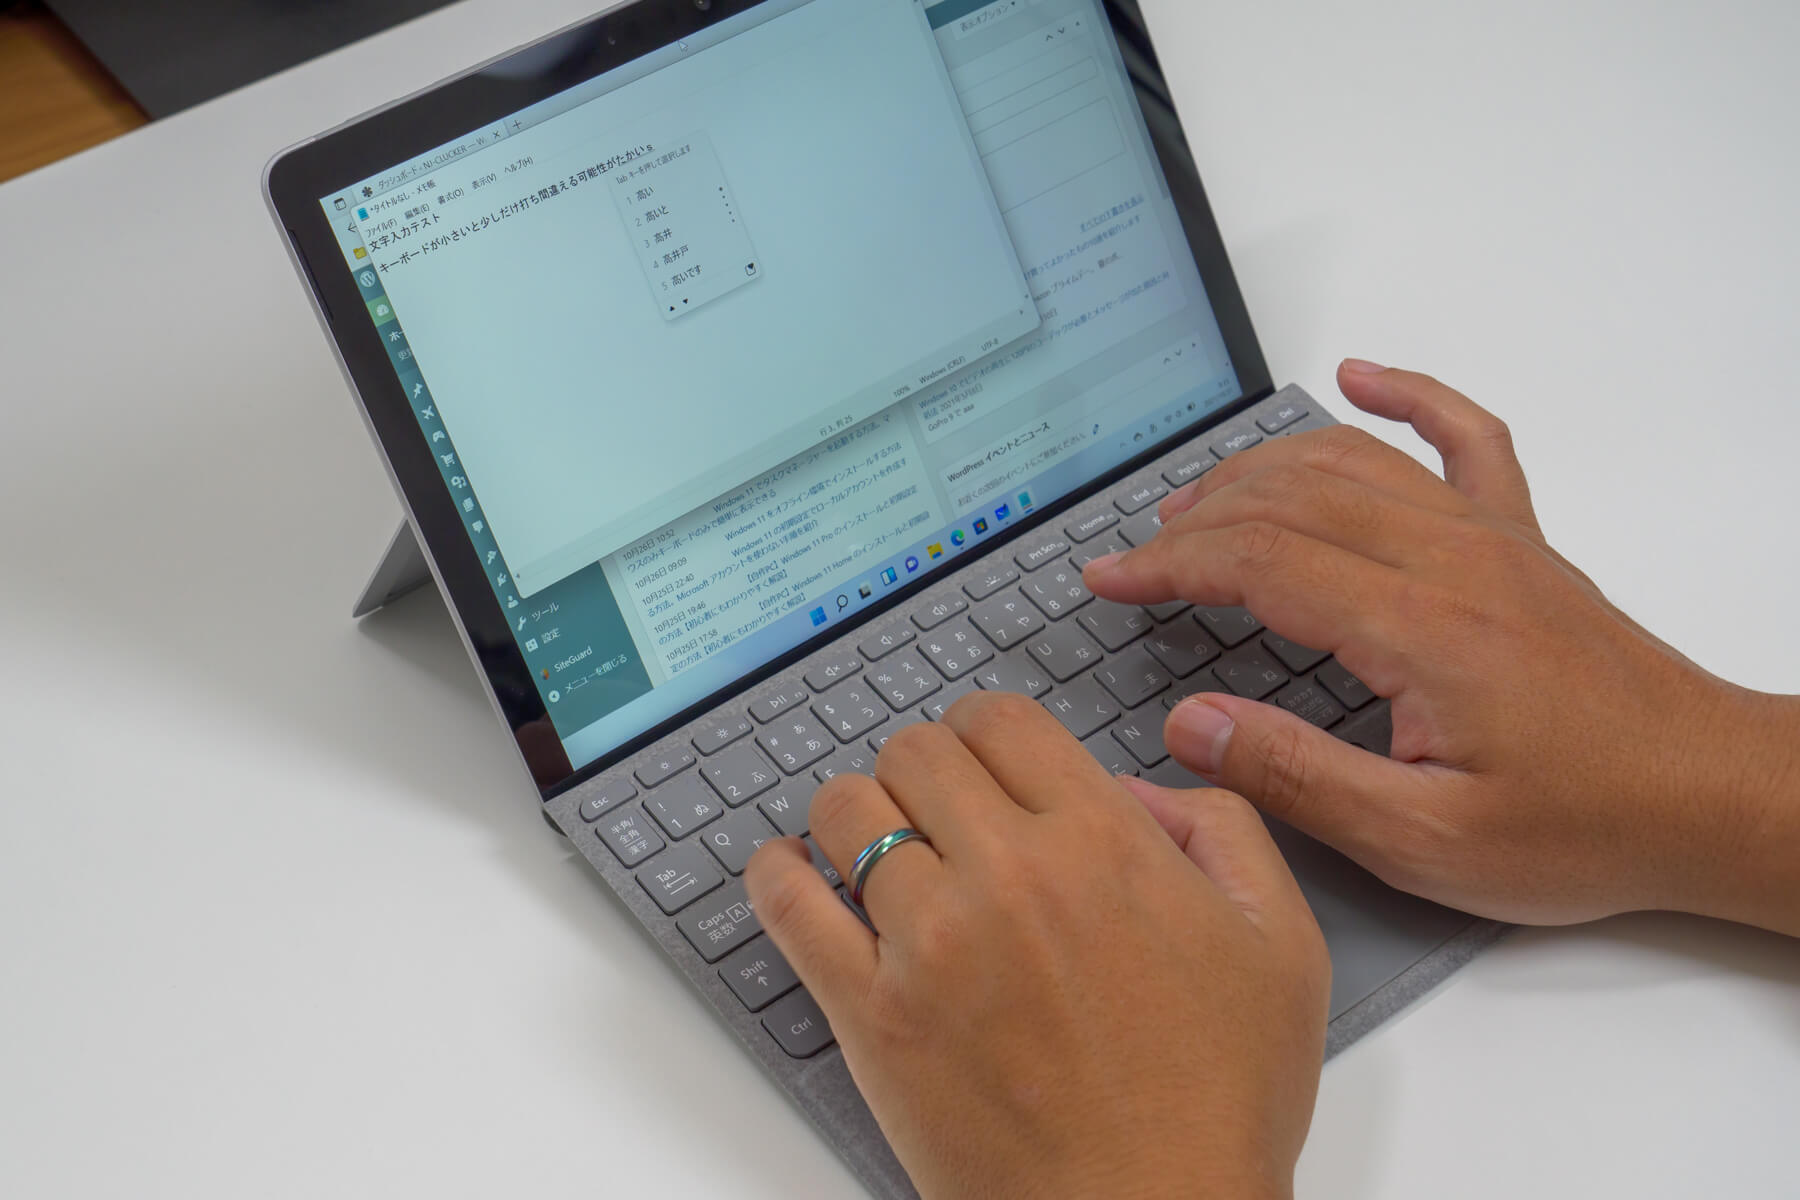 Surface Go 3 実機レビュー。メリット・デメリットを把握しておけば